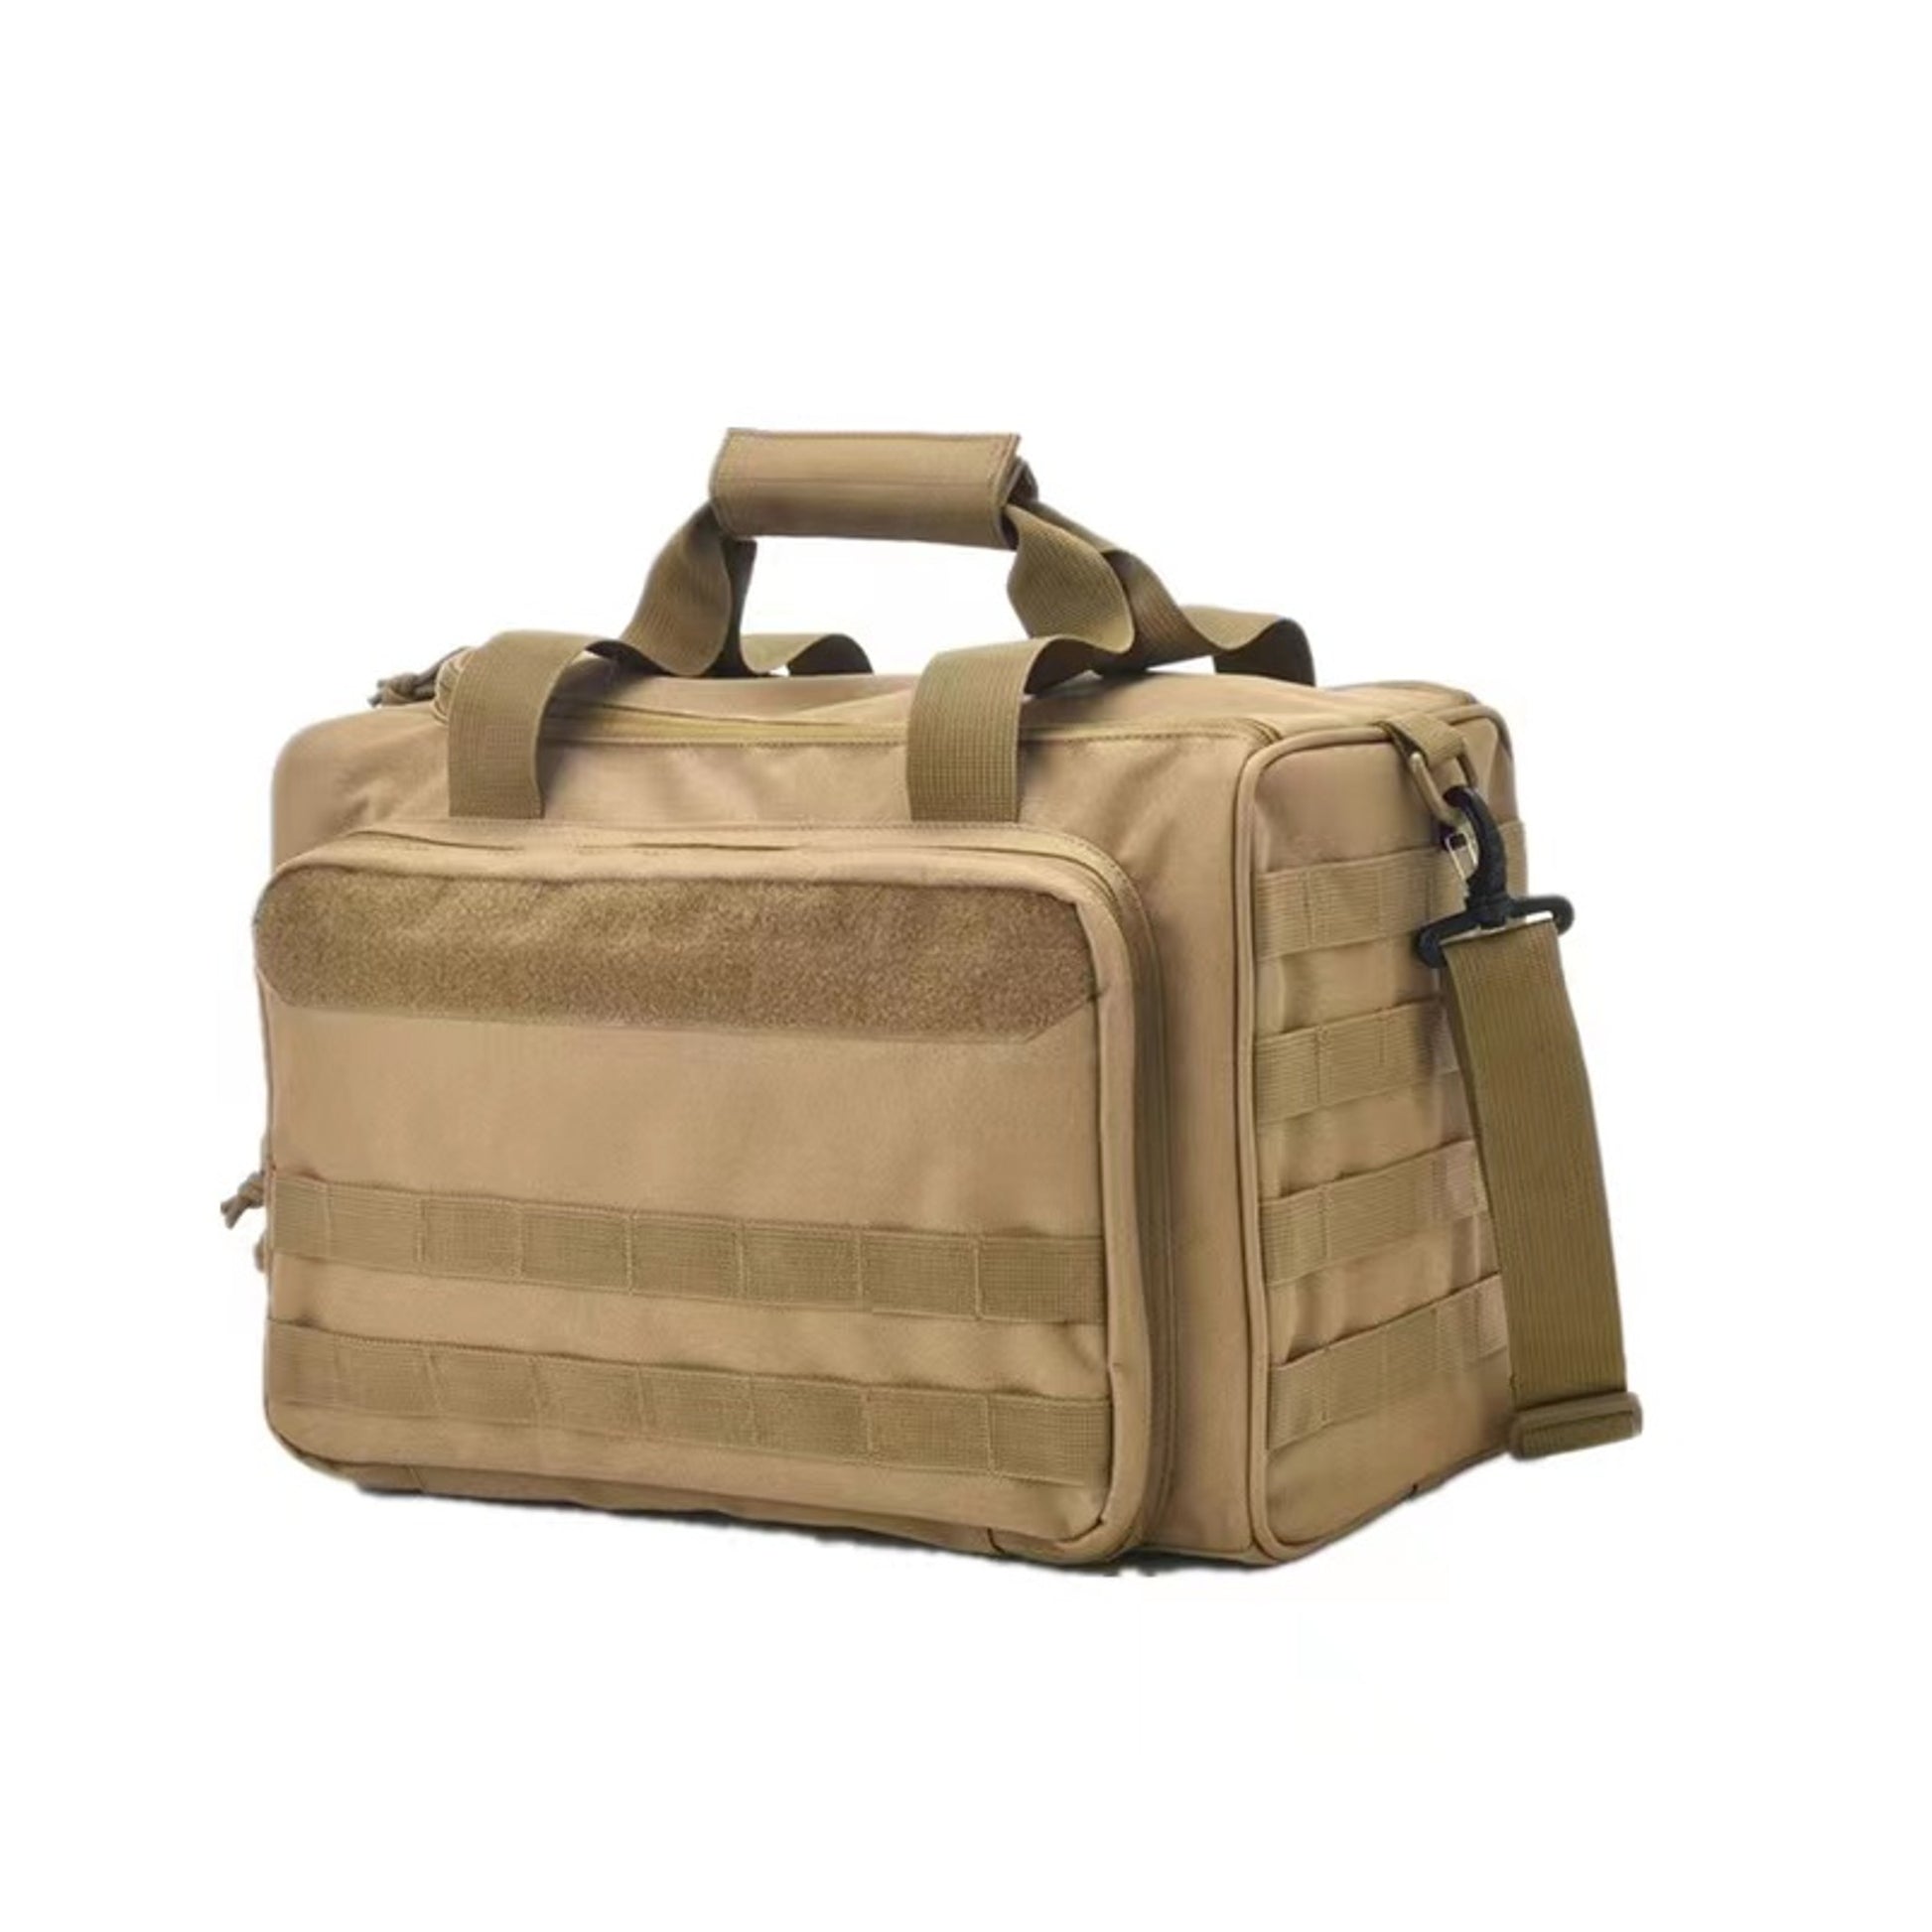 IJ Tactical Range Bag Tan